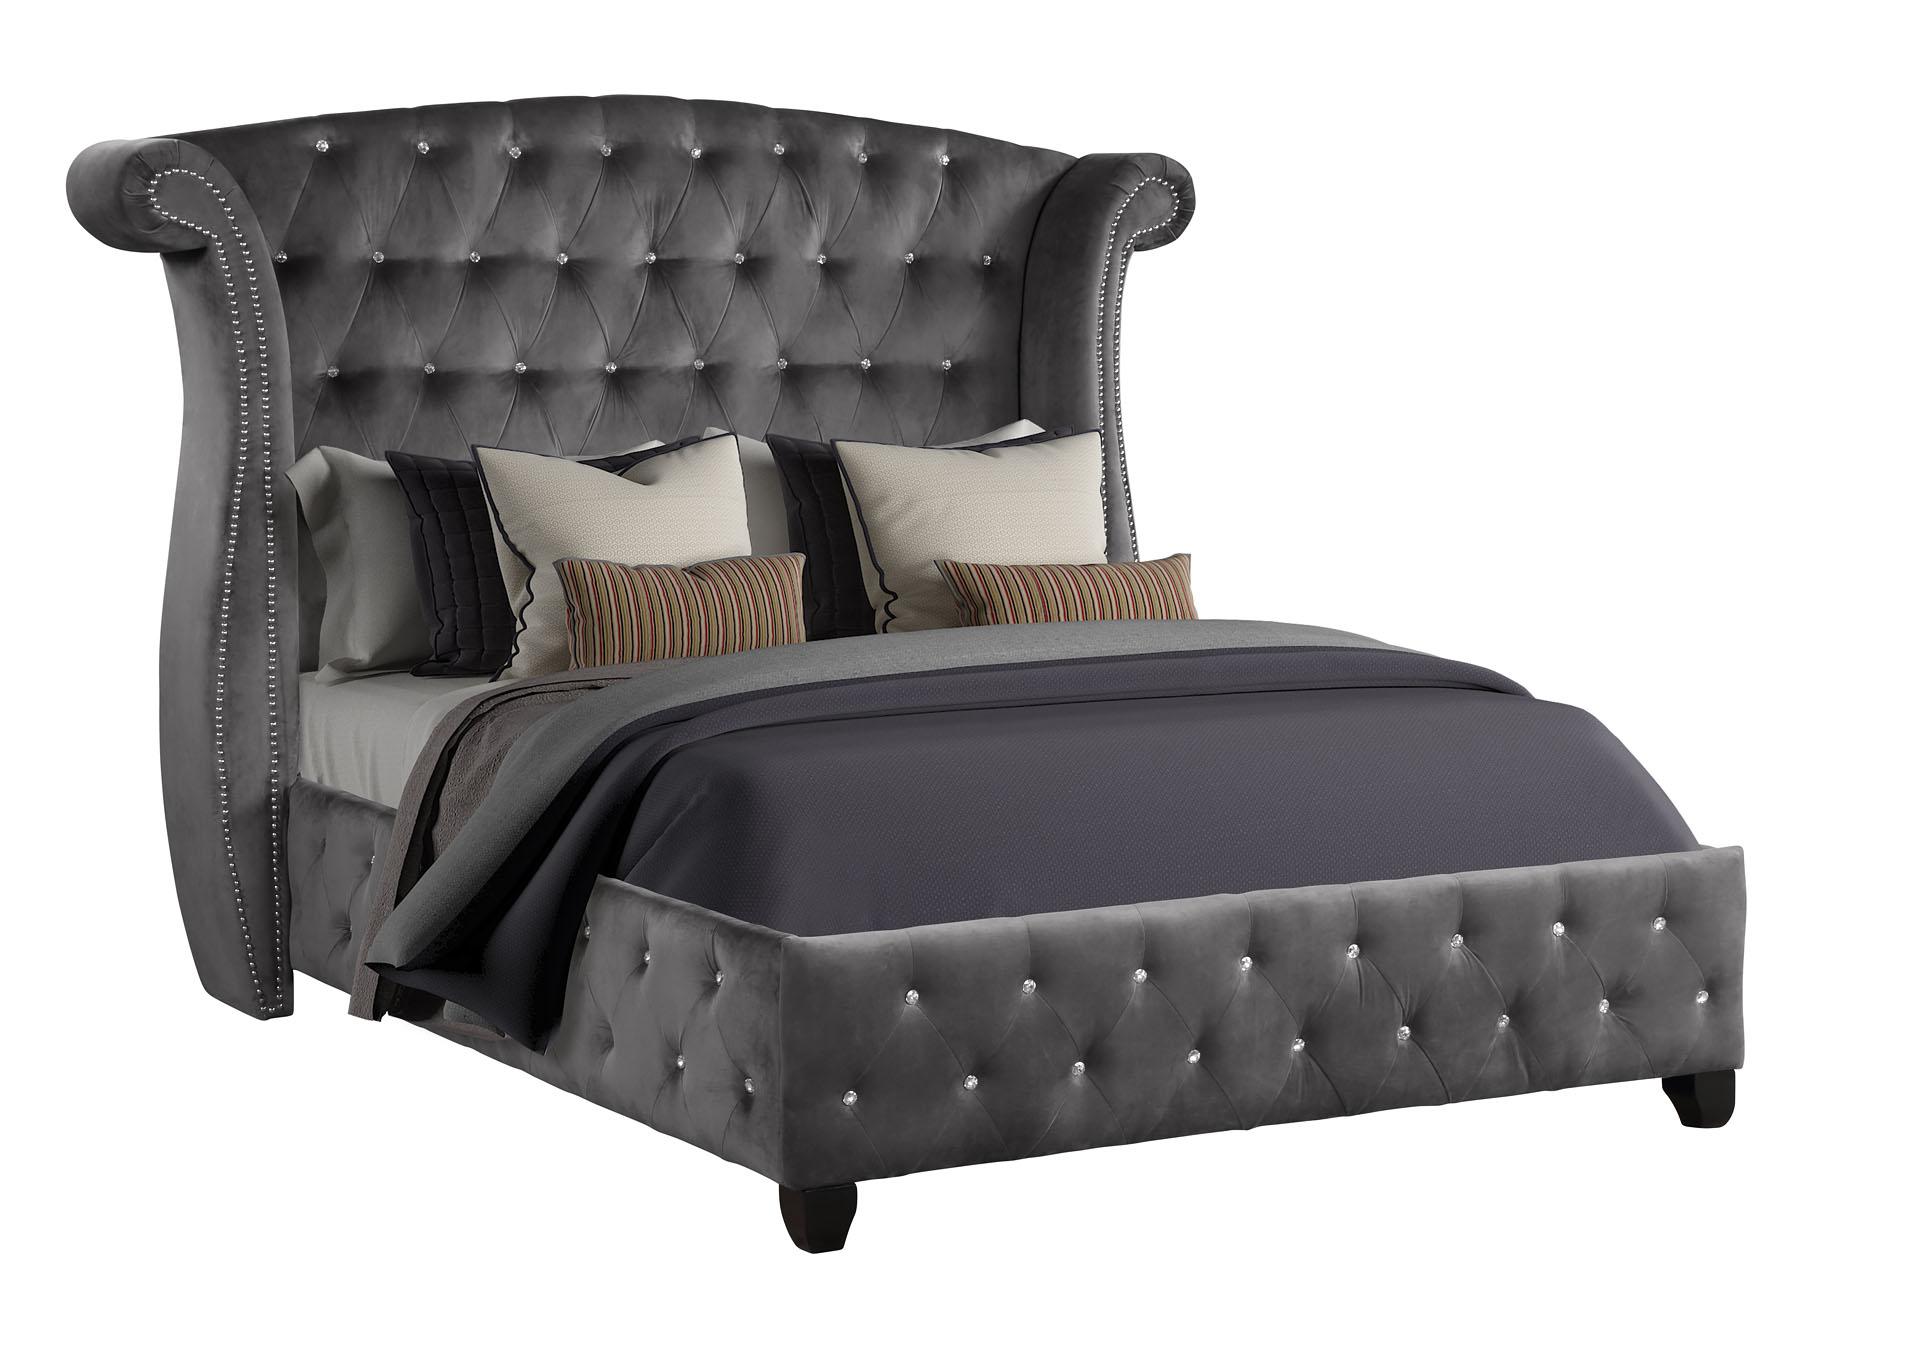 

    
Gray Velvet Tufted Queen Bedroom Set 4P w/ VANITY SOPHIA Galaxy Home Modern
